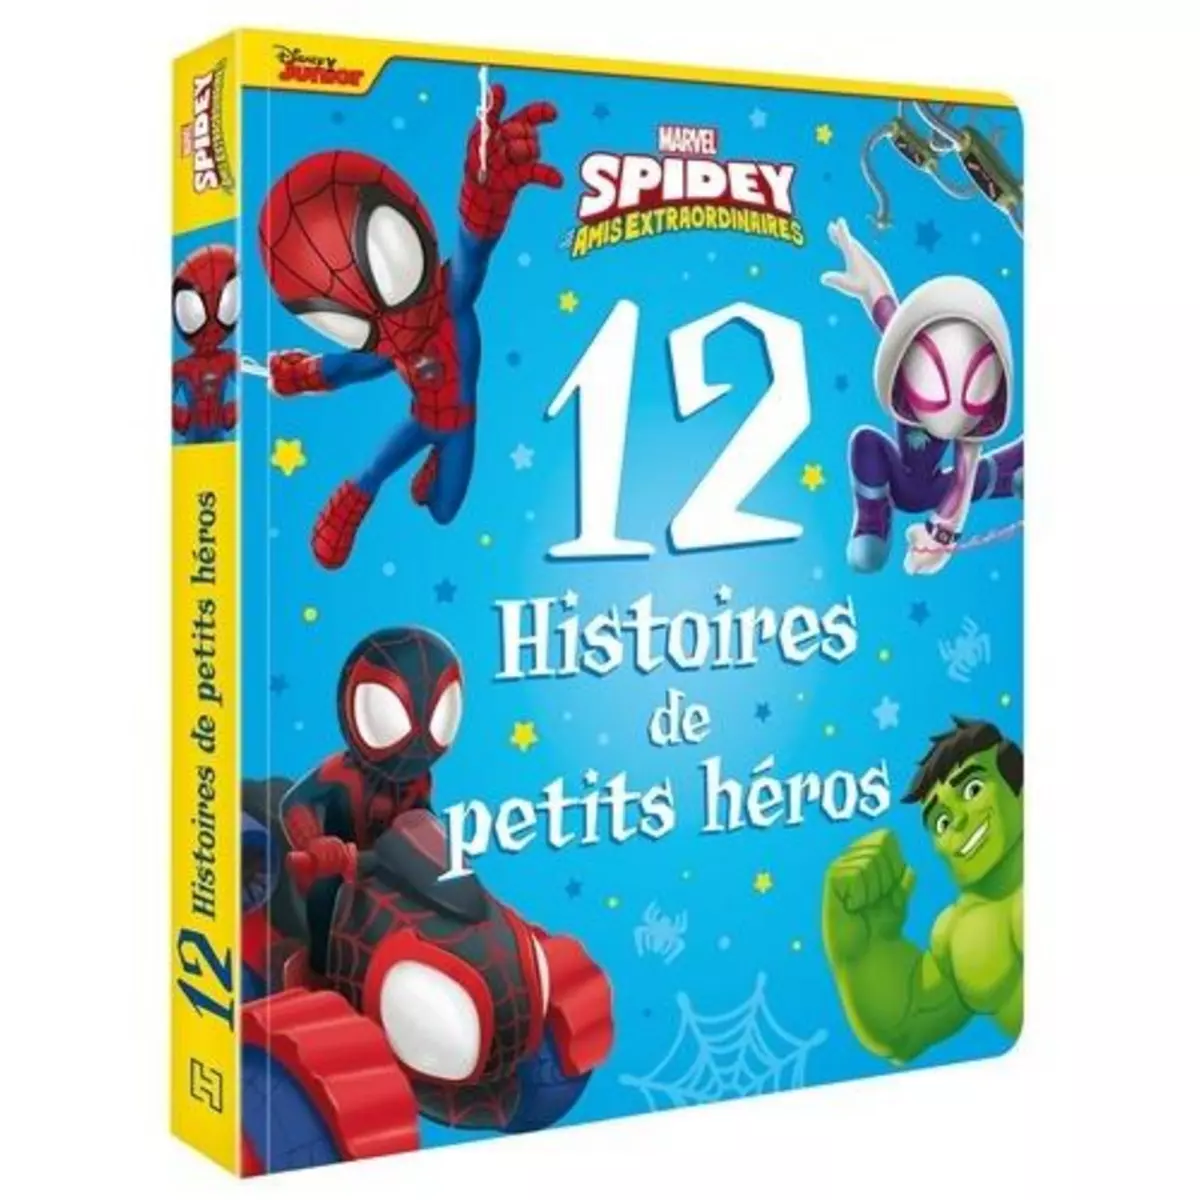  12 HISTOIRES DE PETITS HEROS SPIDEY ET SES AMIS EXRAORDINAIRES, Marvel